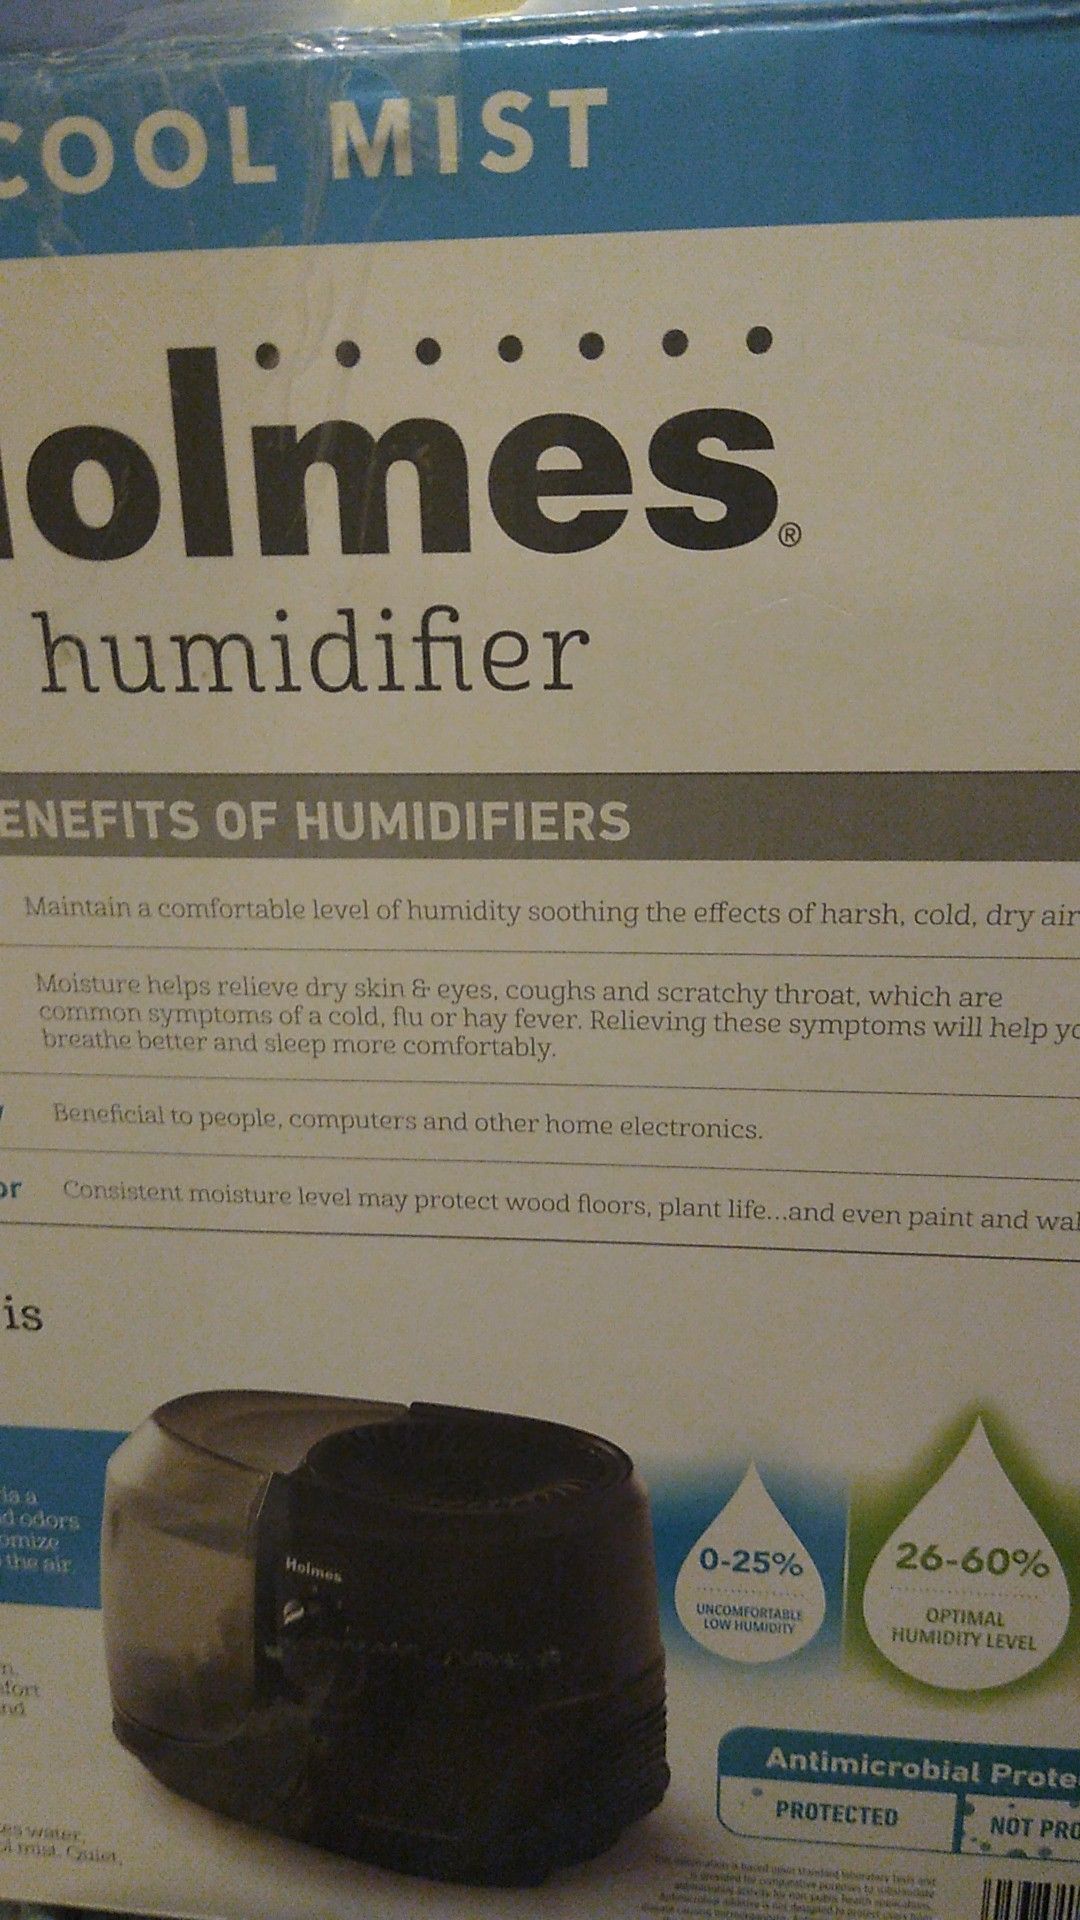 Holmes humidifier